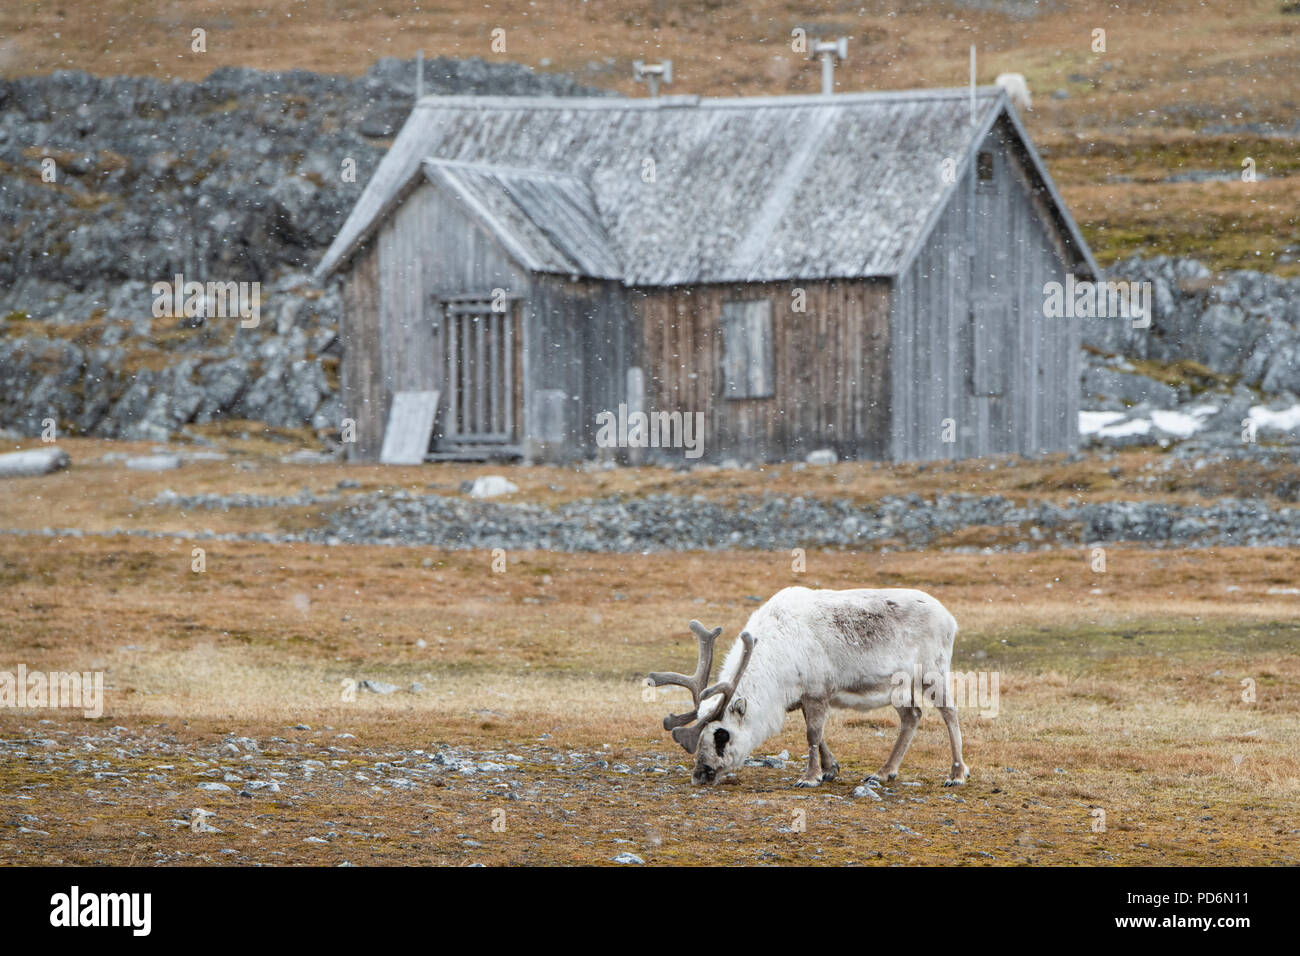 La Norvège, Svalbard, Spitzberg. Renne du Svalbard (Rangifer tarandus platyrhynchus) dans la neige en face de l'ancienne cabine d'extraction. Banque D'Images